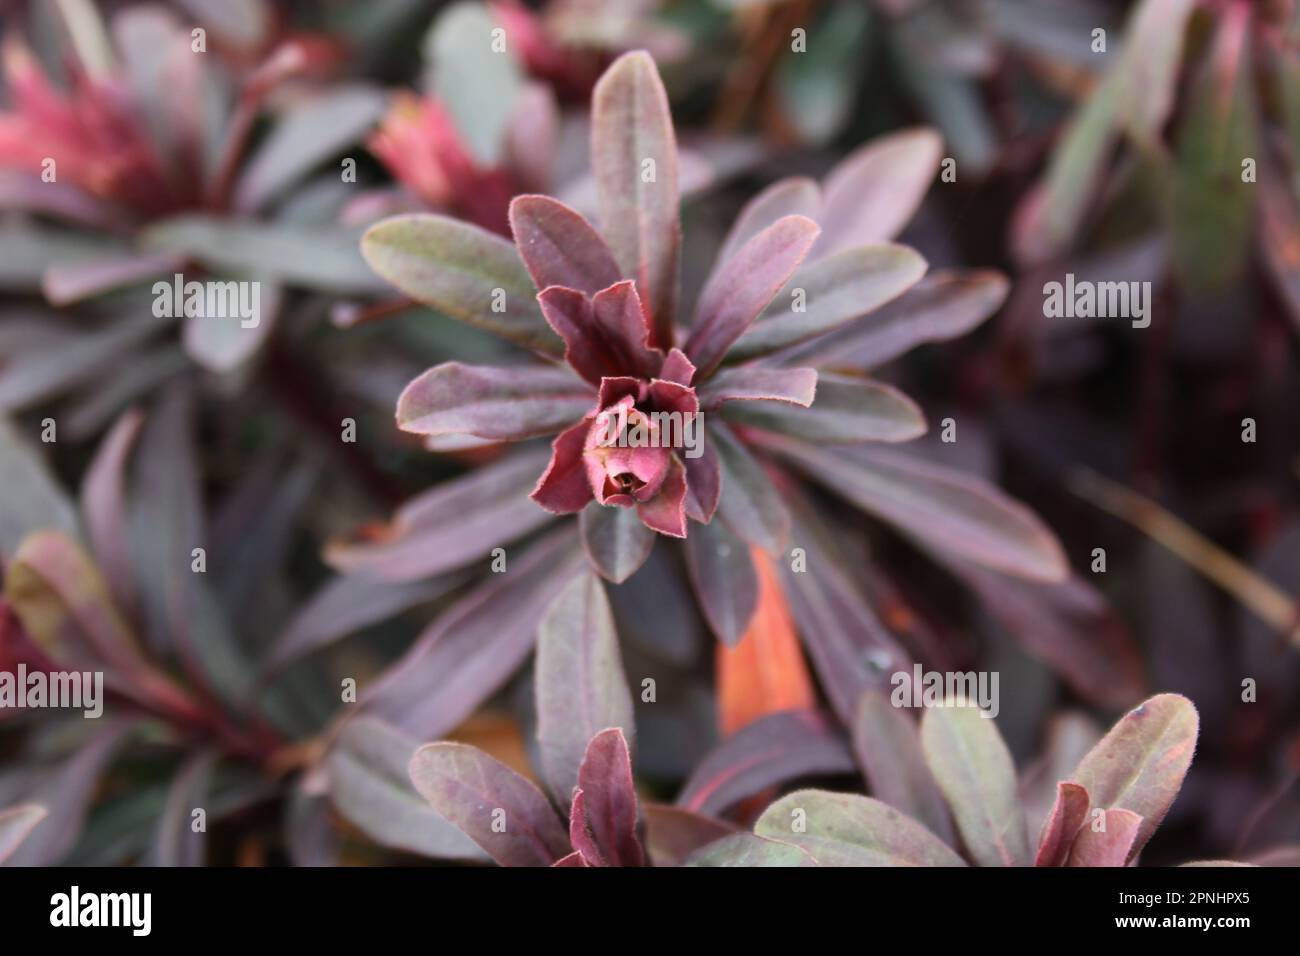 A purple euphorbia plant in the garden Stock Photo